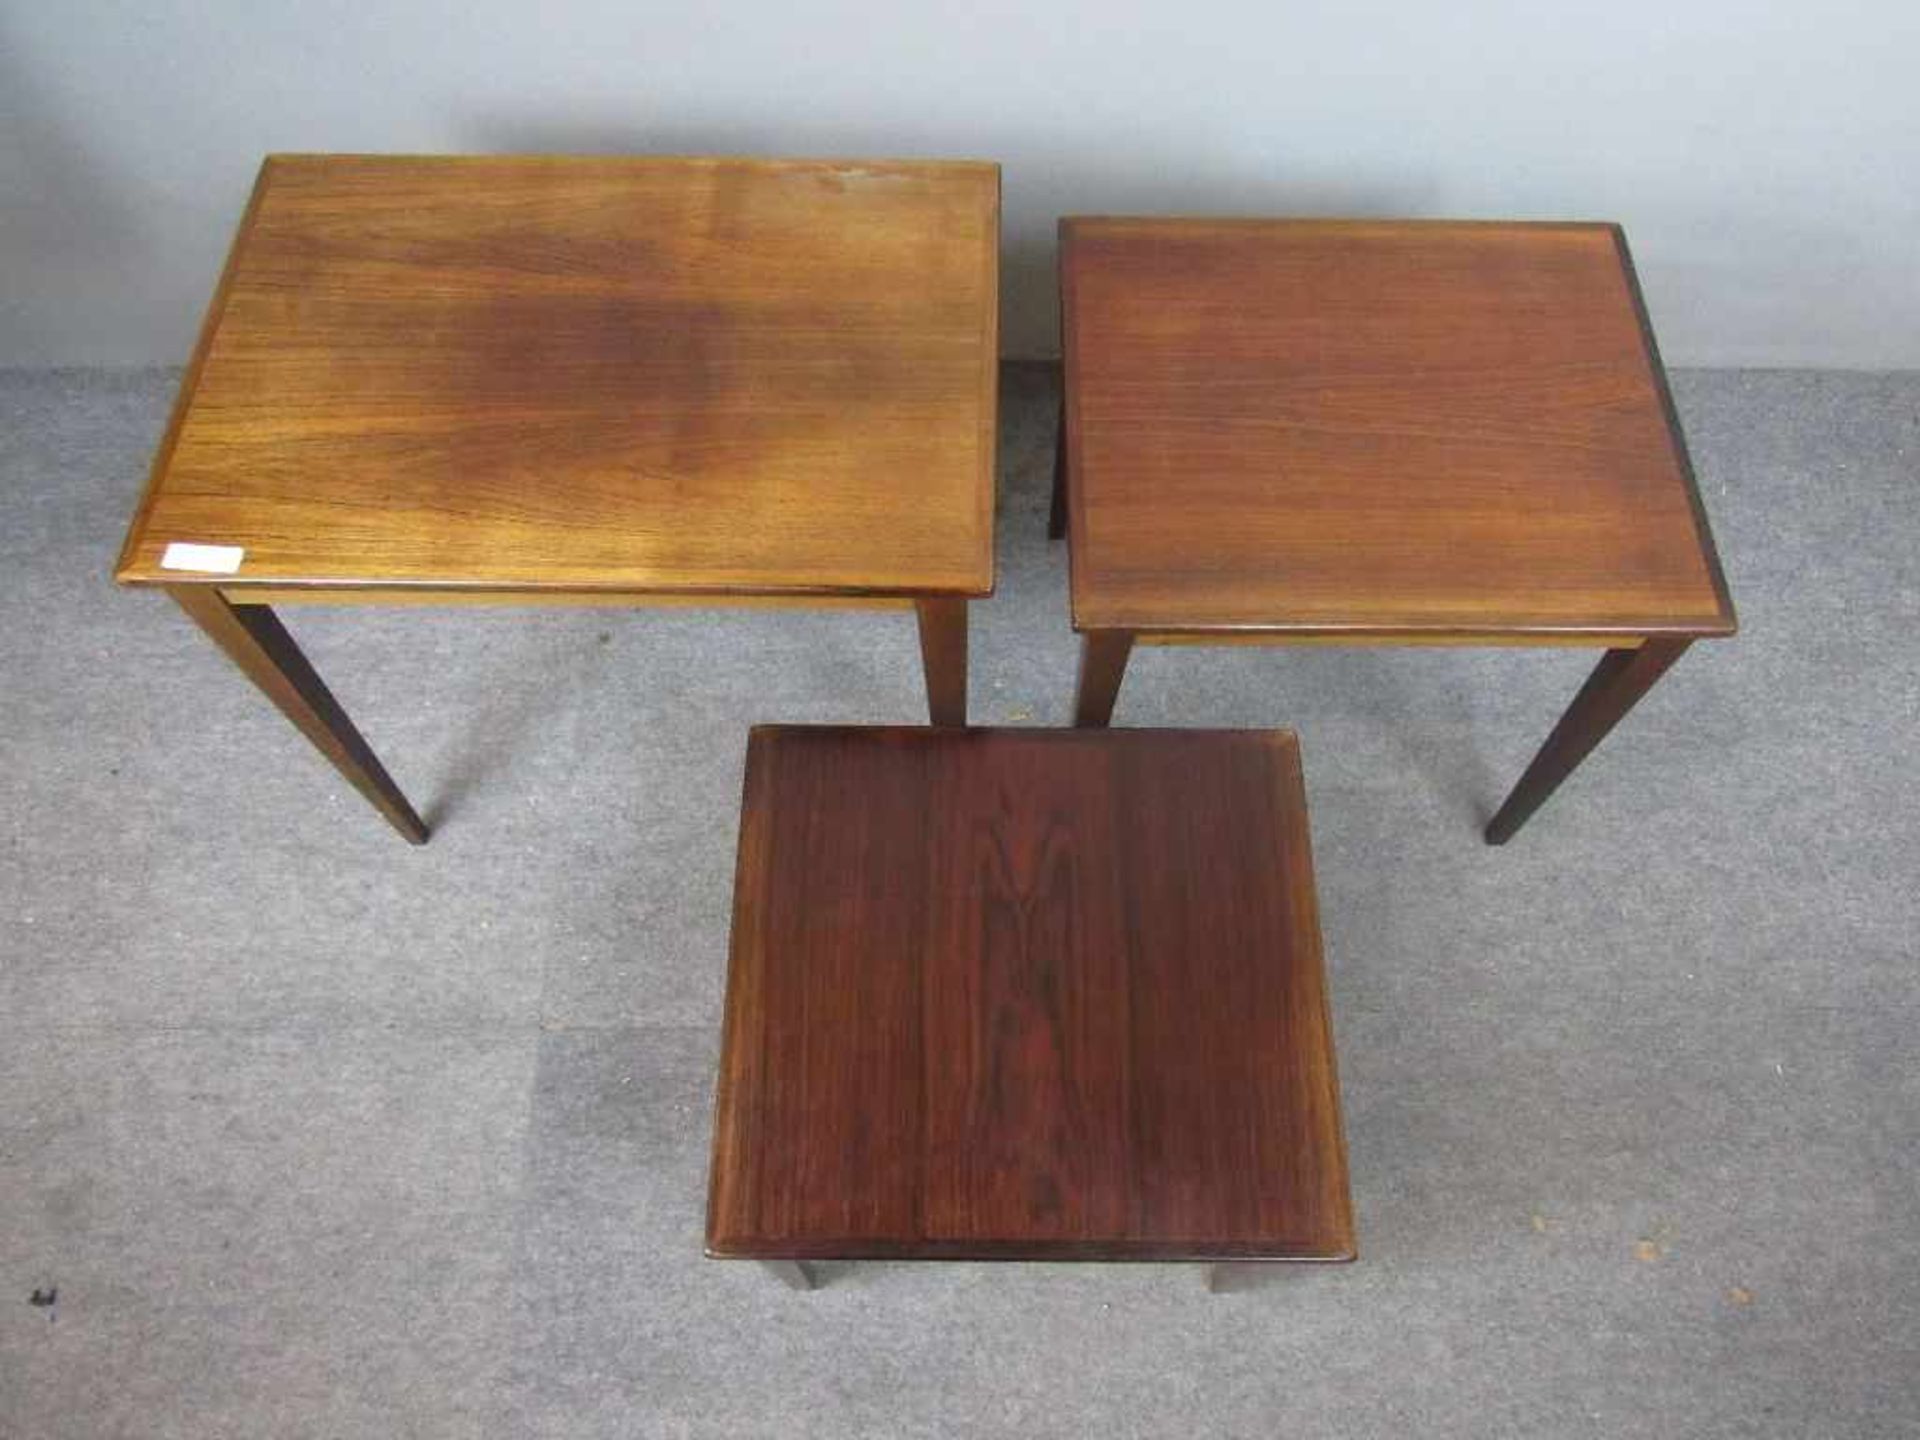 Dreiersatz Nissing Table Teak gestempelt Made in Denmark großer Maße:58x40x53cm- - -20.00 % buyer' - Image 2 of 6